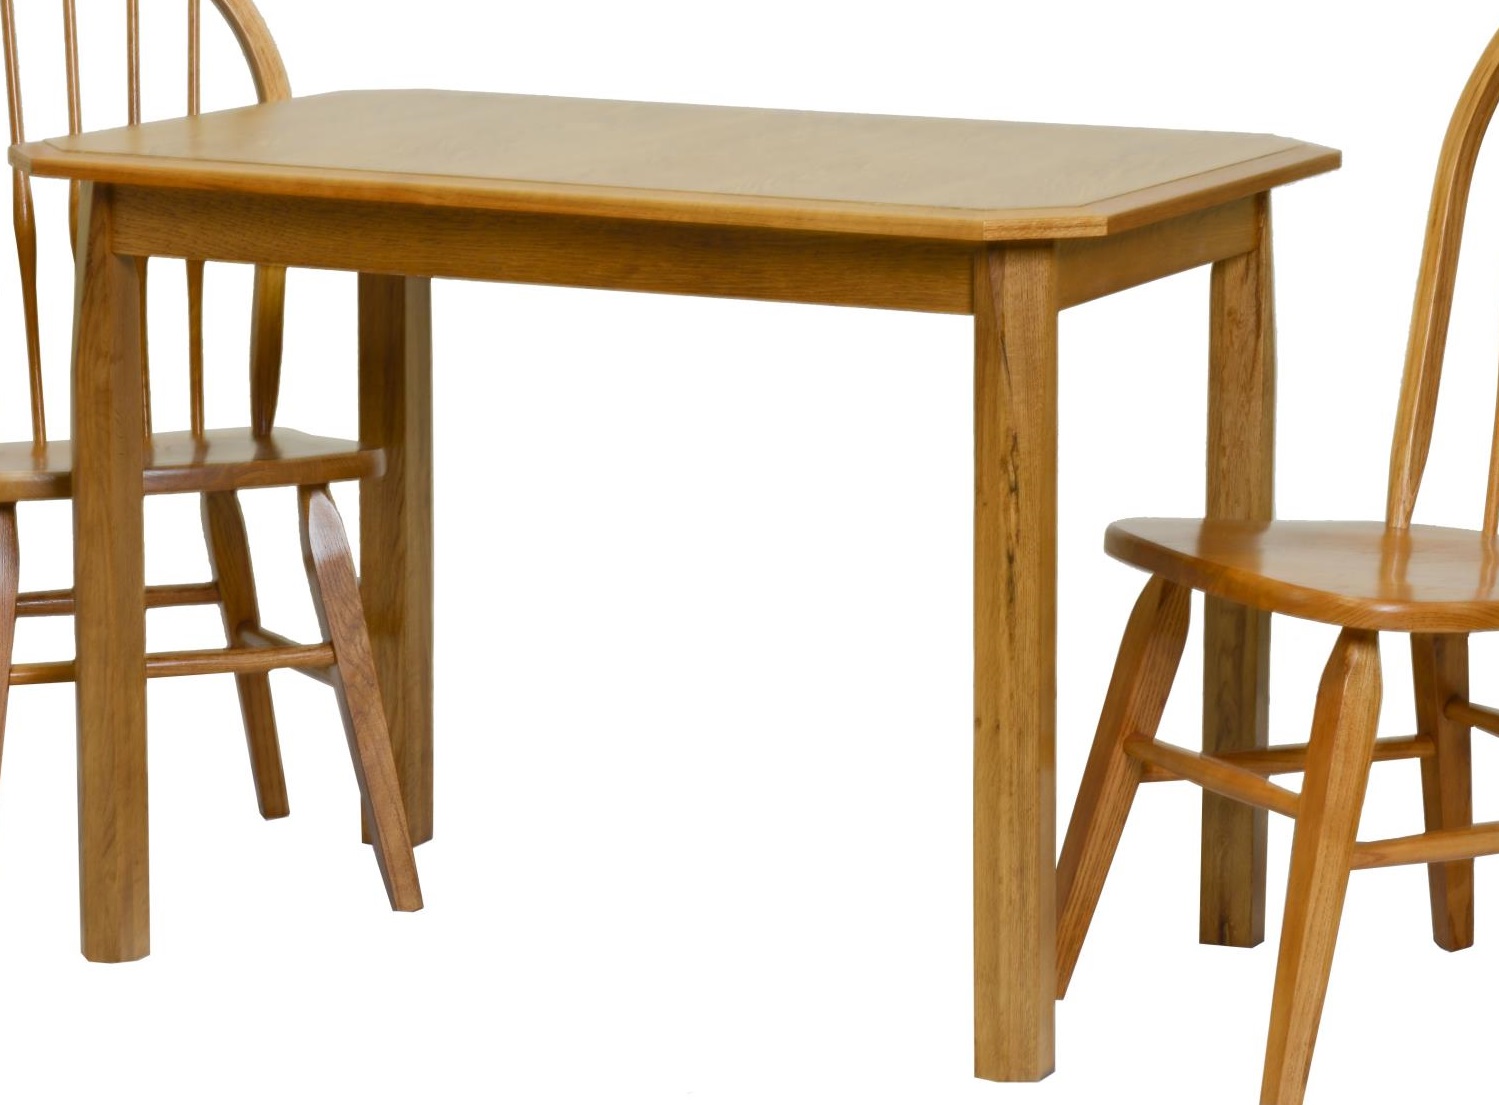 28" X 43" X 30" Harvest Oak Hardwood Laminated Table